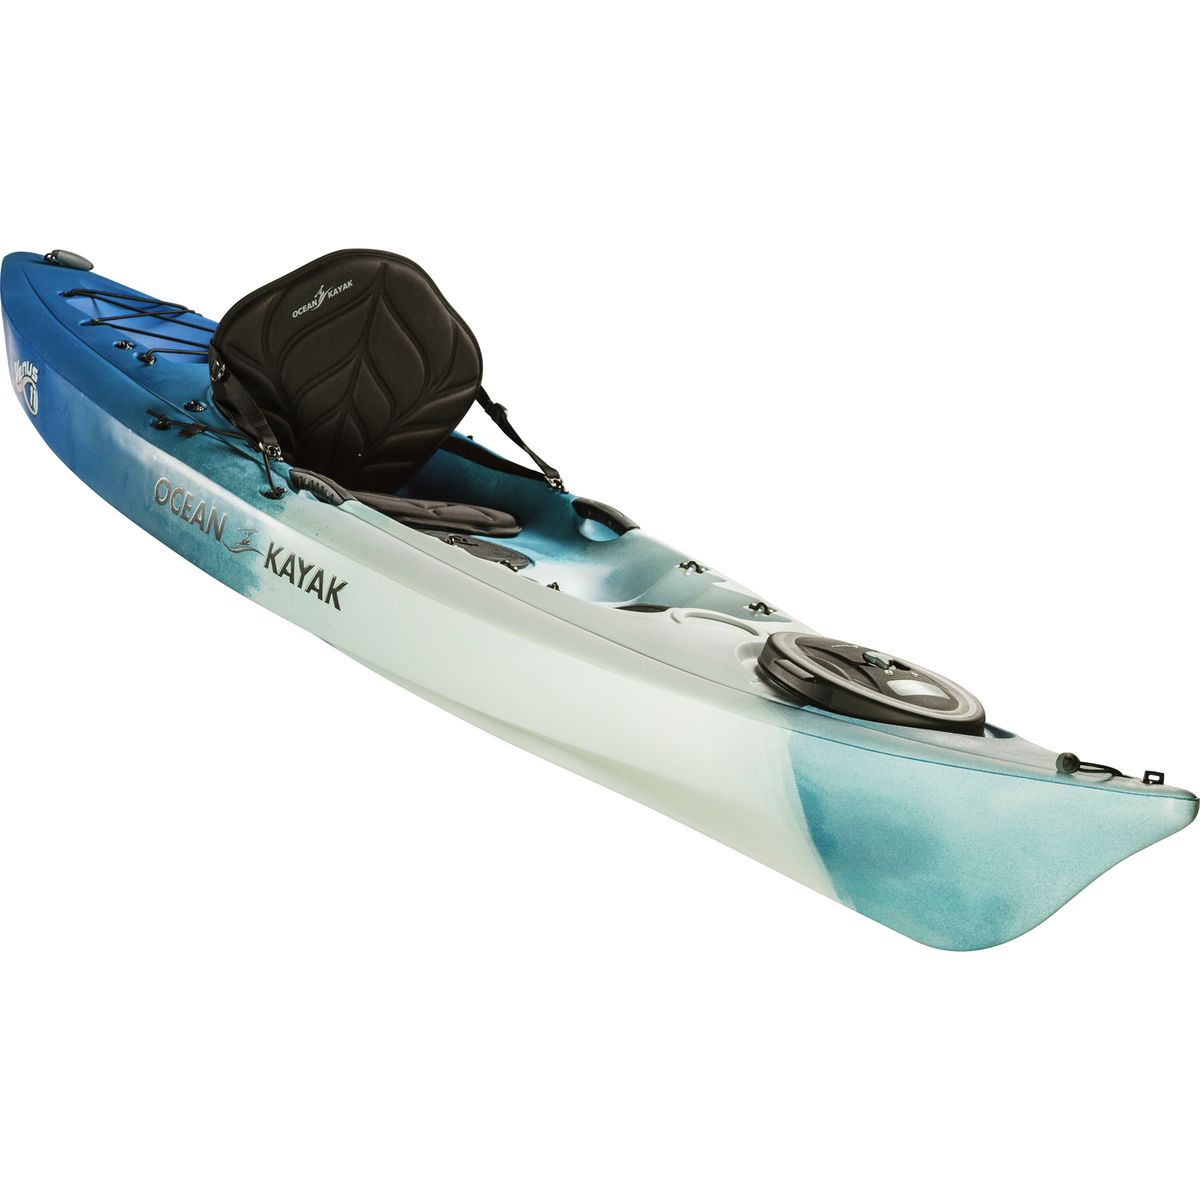 Ocean Kayak Venus 11 SitOnTop Kayak 2021 Women's eBay